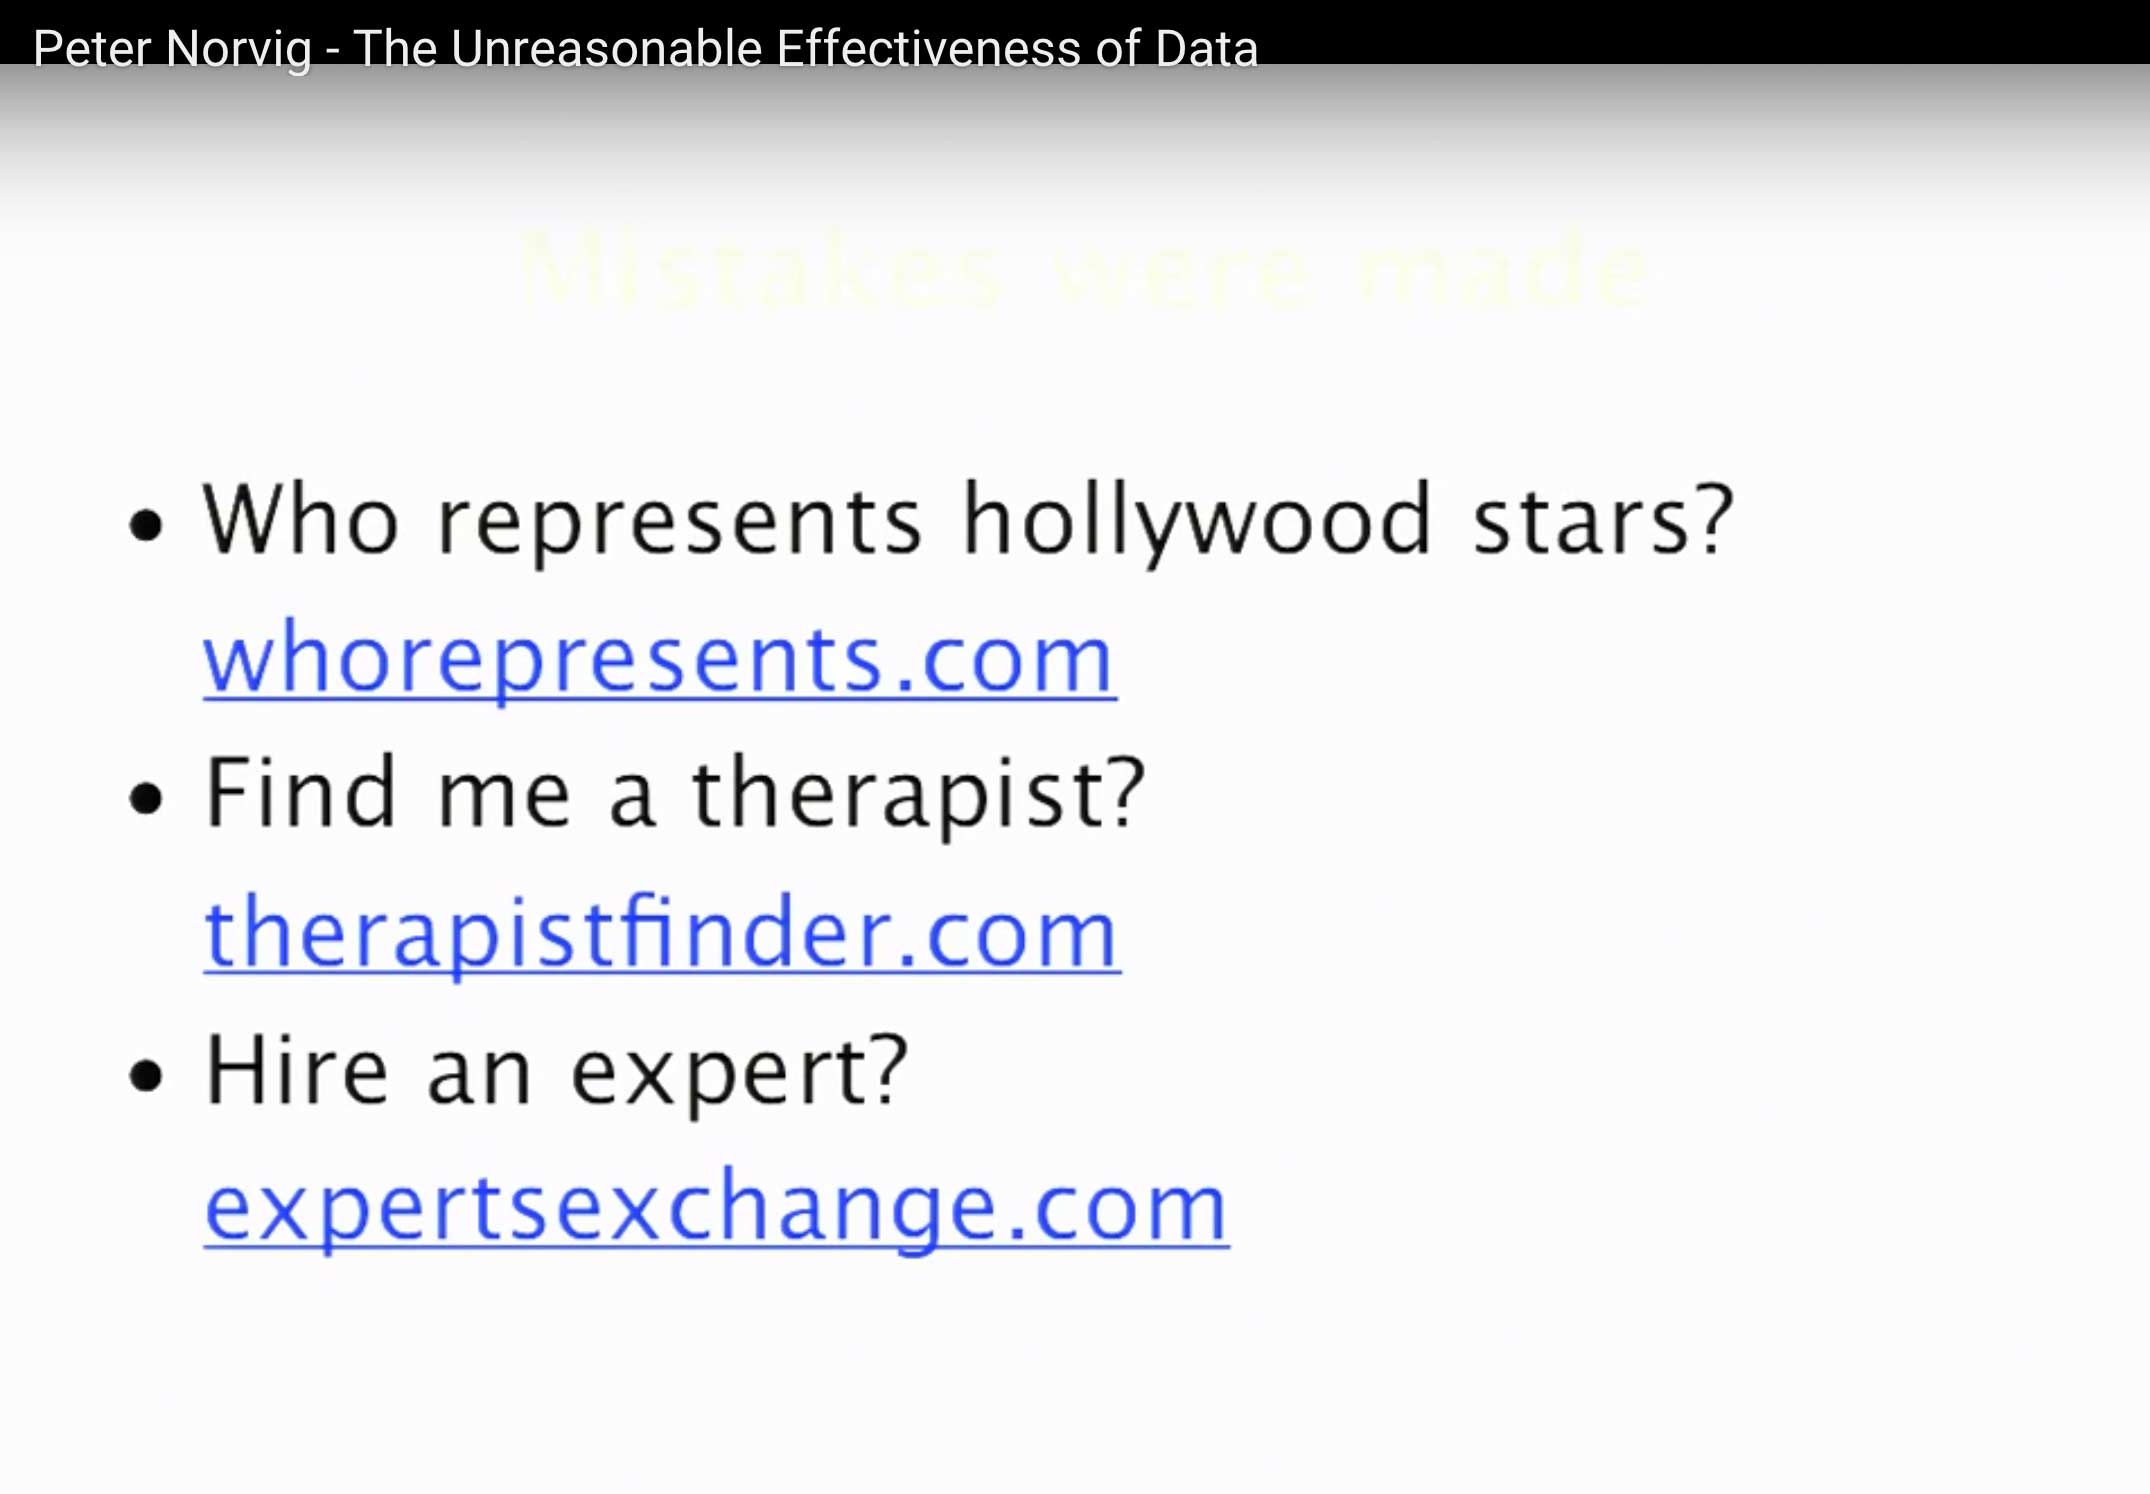 slide from Norvig on expertsexchange.com